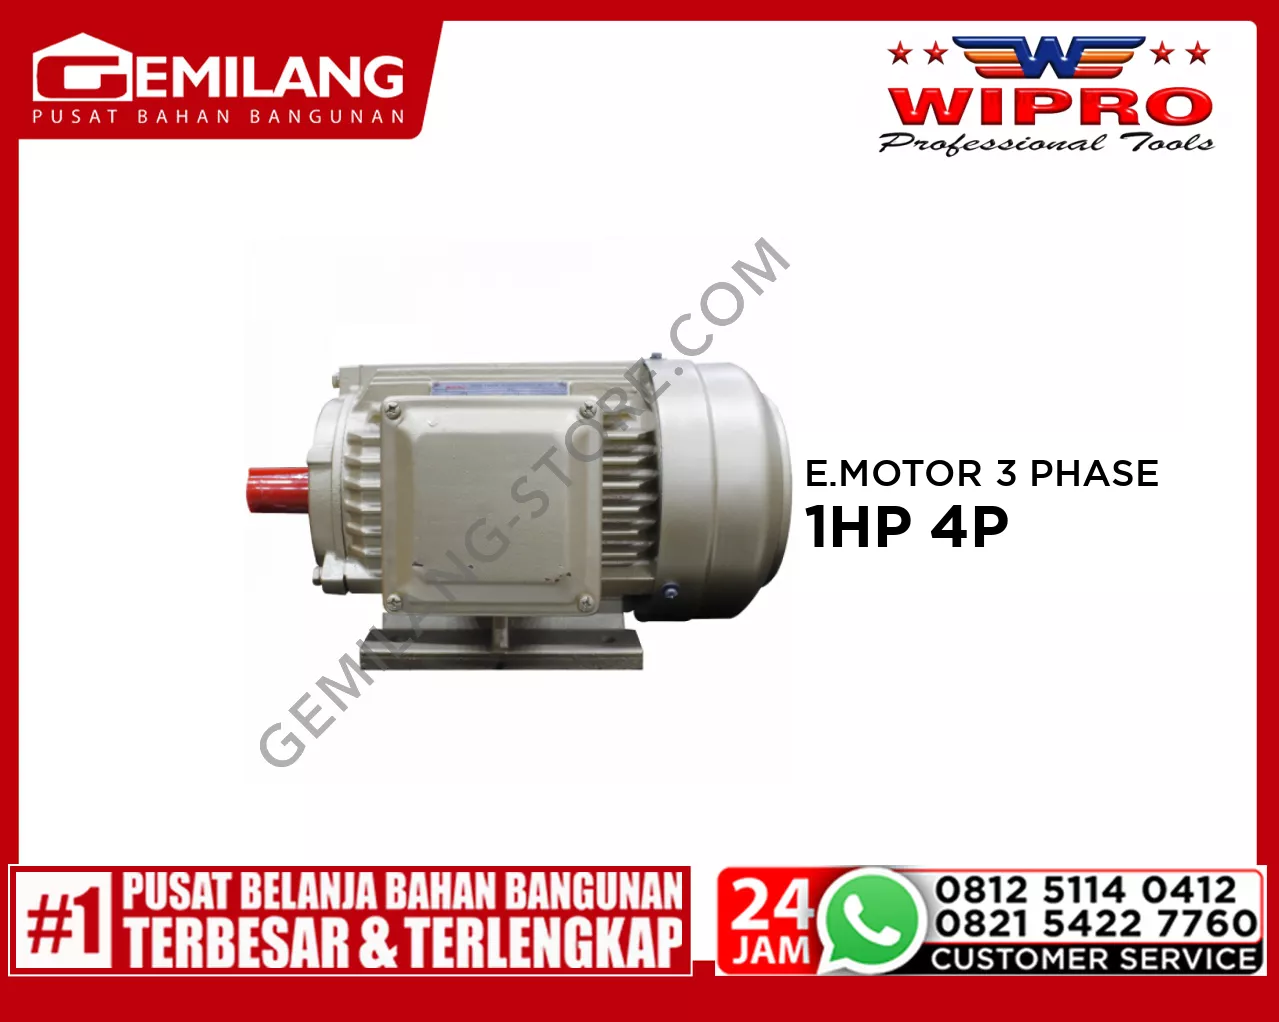 WIPRO ELECTROMOTOR 3 PHASE 1HP 4P (FOAM)